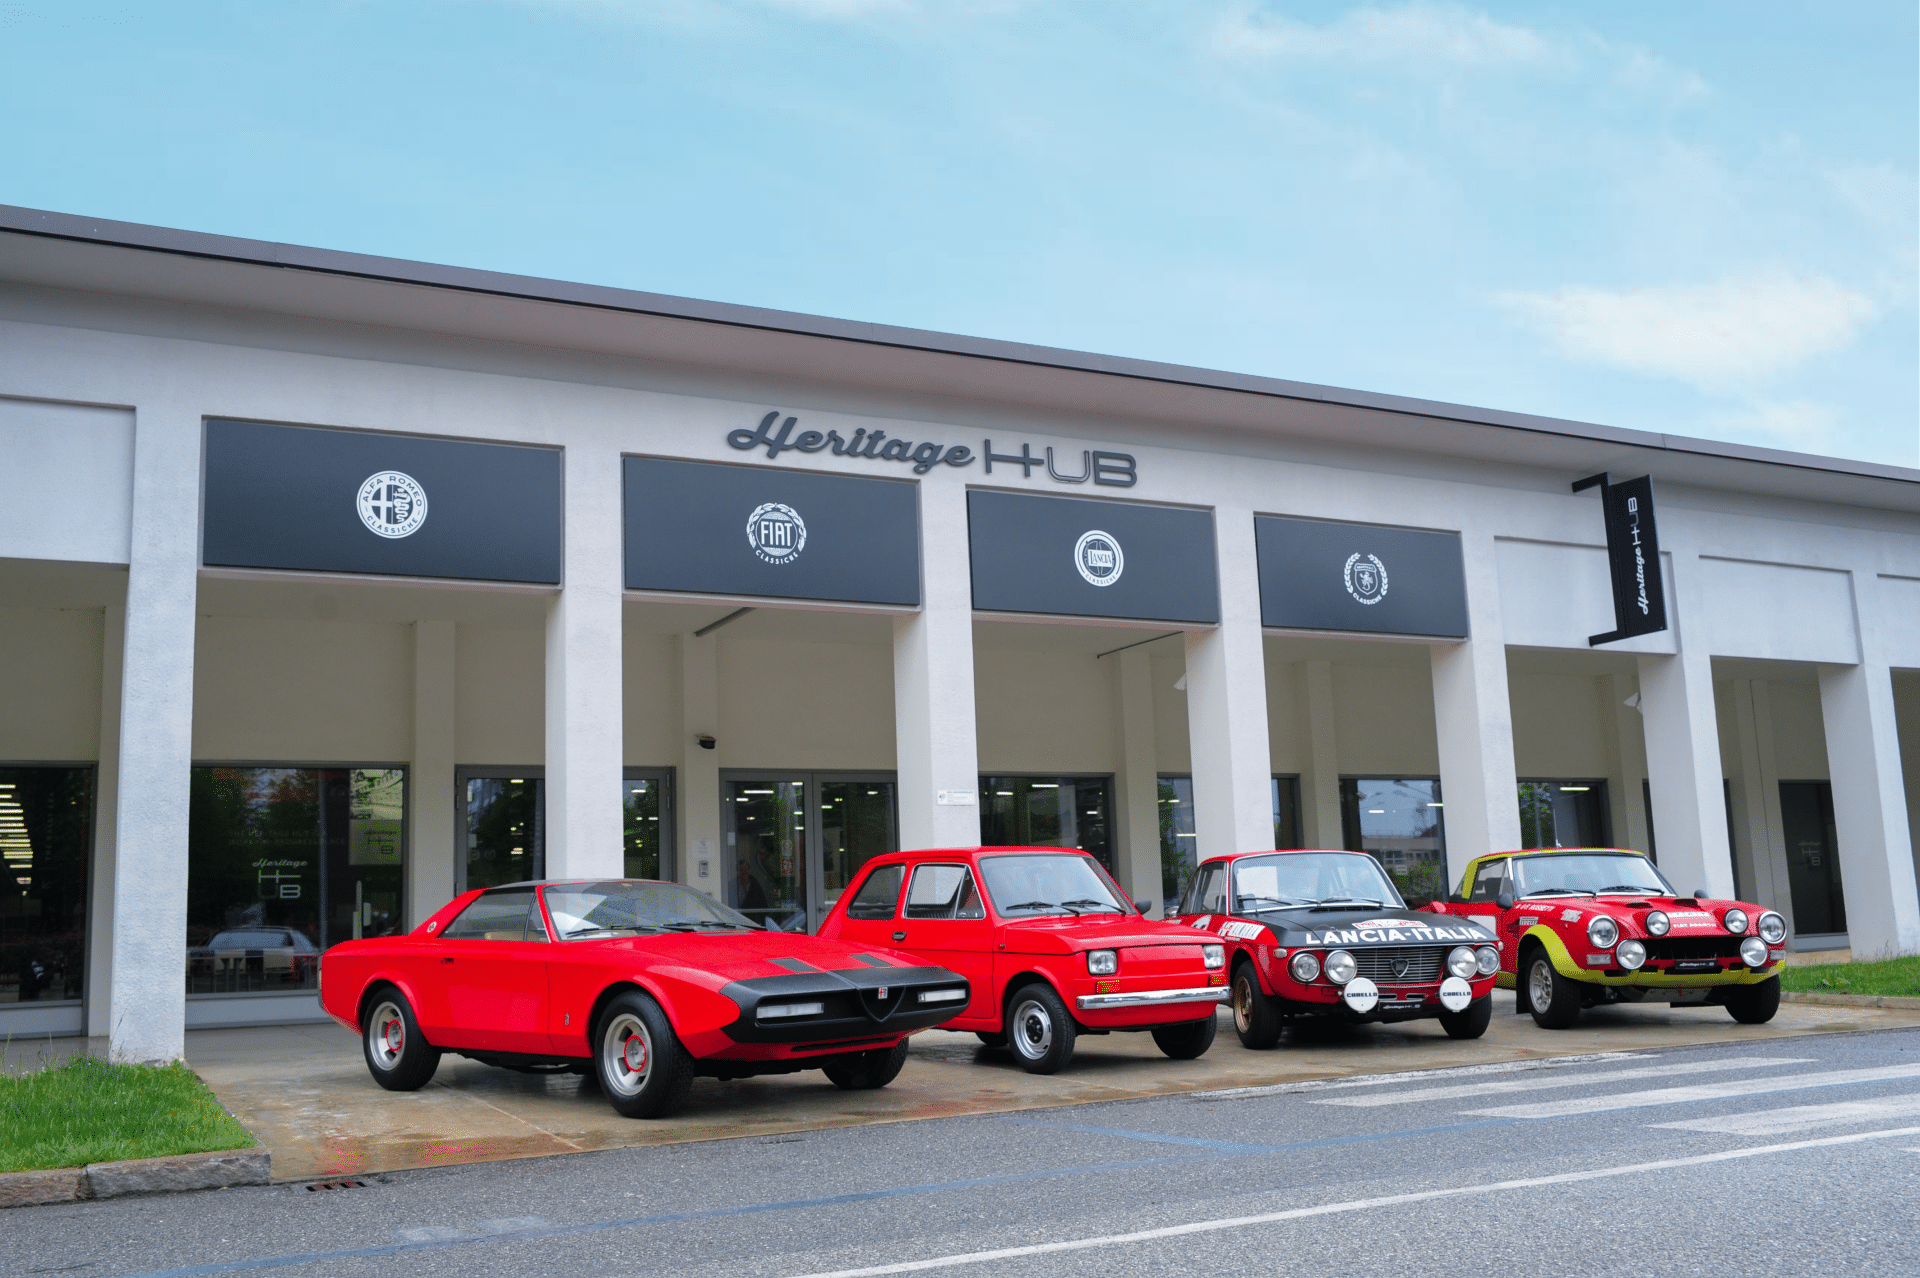 CS 03 Automotoretrò : Το τμήμα Heritage της Stellantis φέρνει στο φως 4 αυτοκίνητα από το 1972